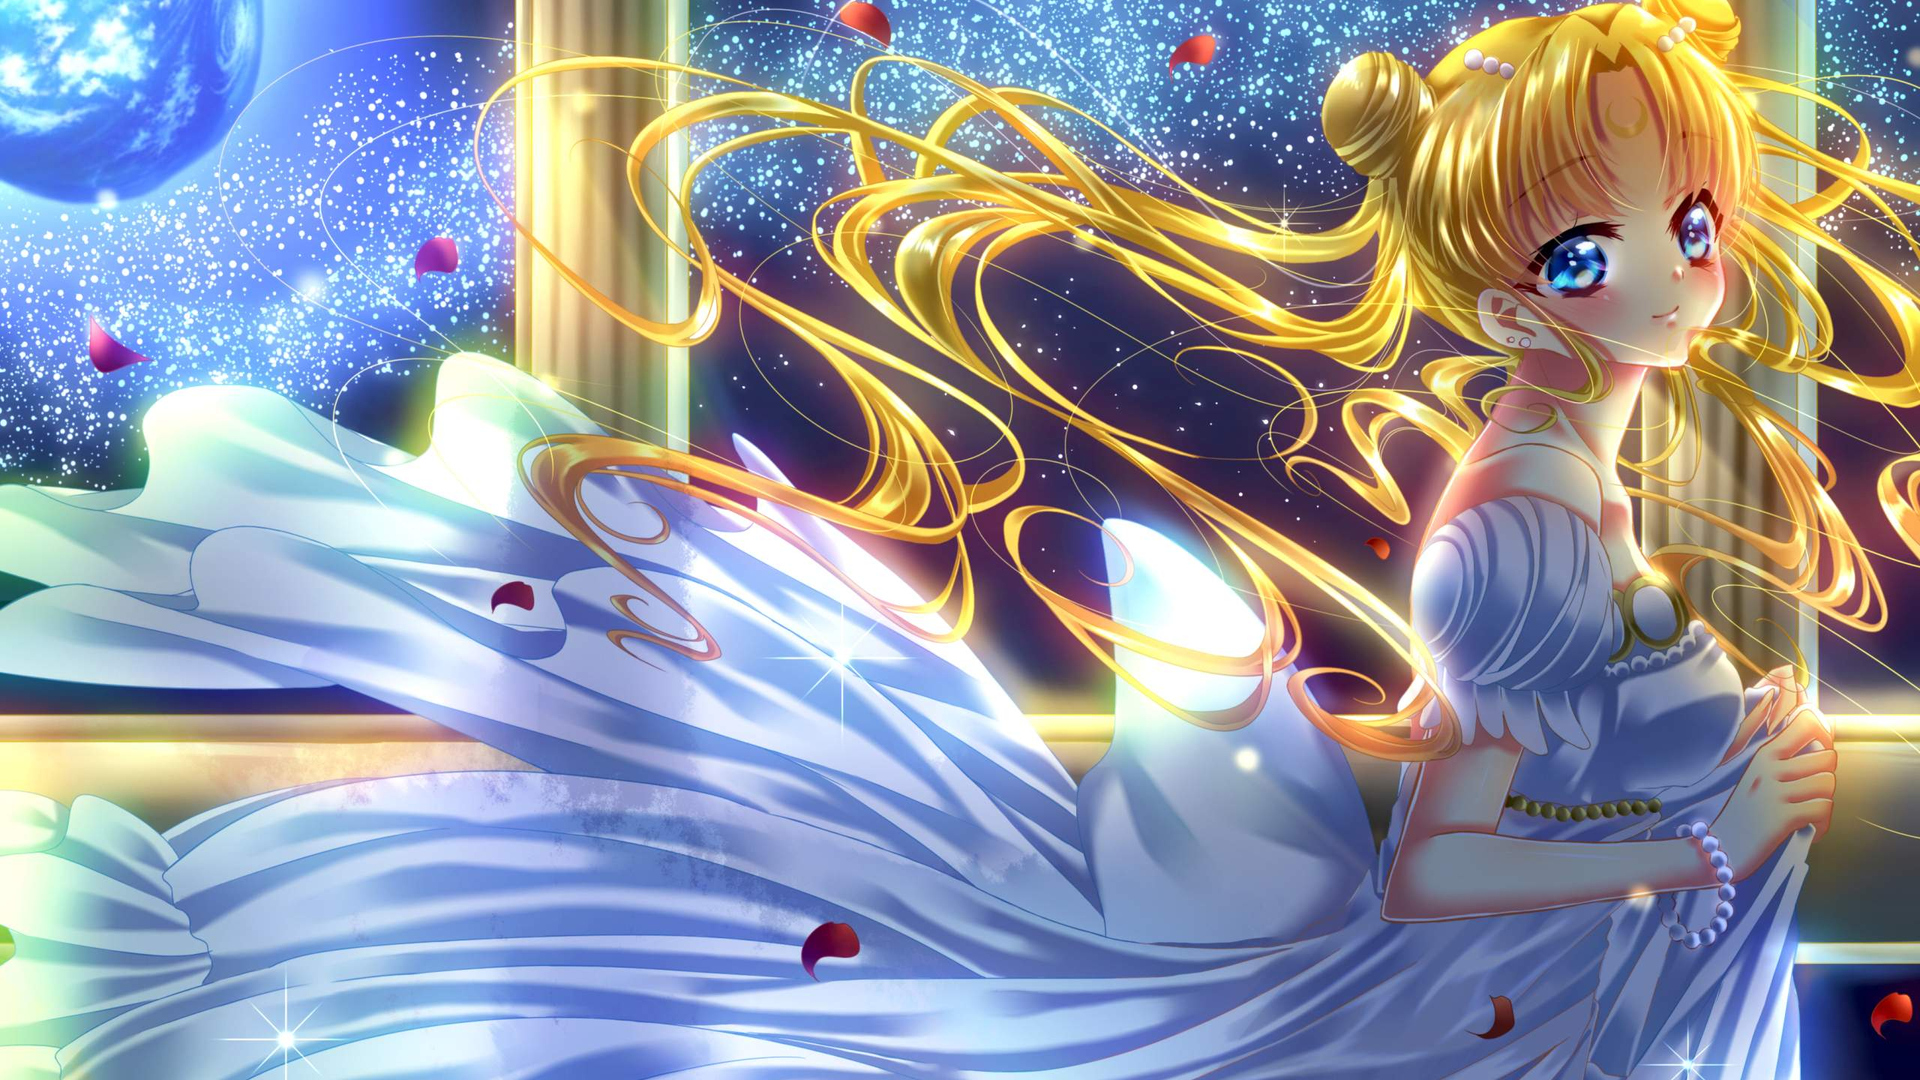 Sailor Moon - Cute Anime Girls Wallpapers and Images - Desktop Nexus Groups